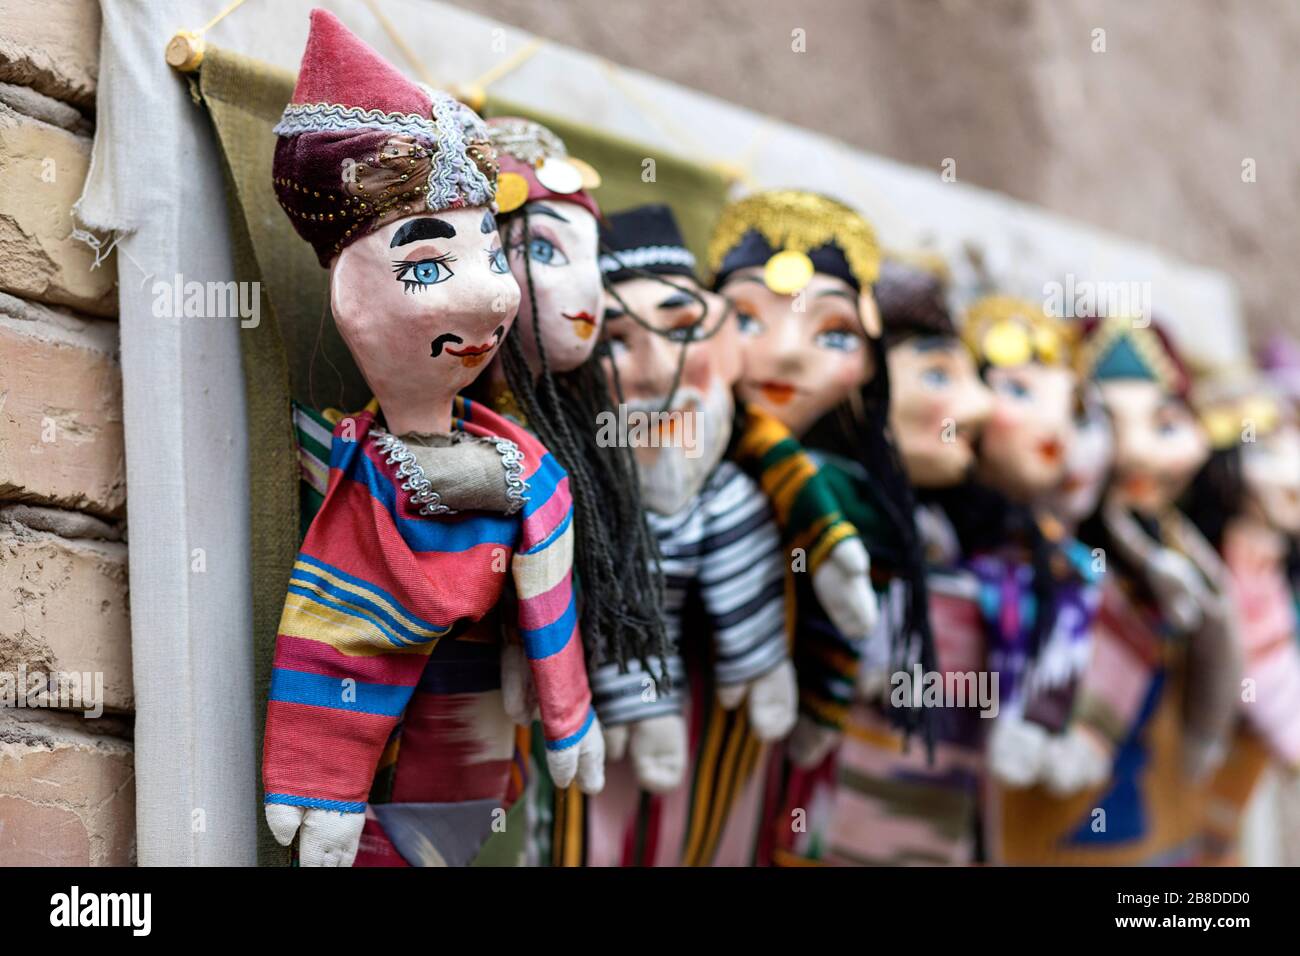 The traditional Uzbek ceramic dolls and hand puppets ceramic of Khiva for sale, Uzbekistan Stock Photo